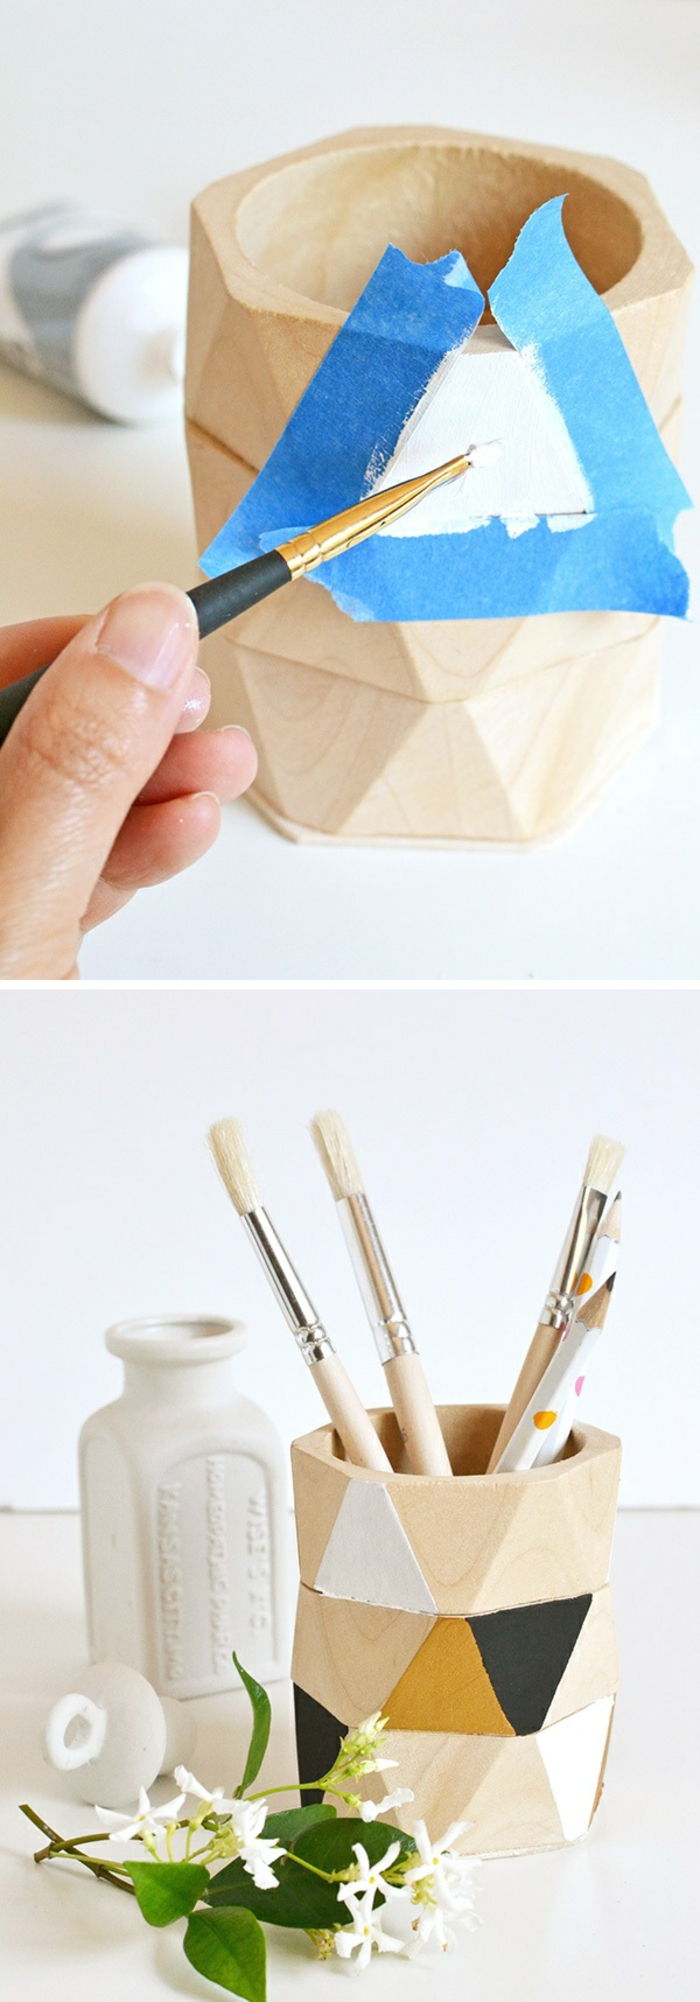 maak en versier houten potloodhouders zelf, plakband, verf, borstels